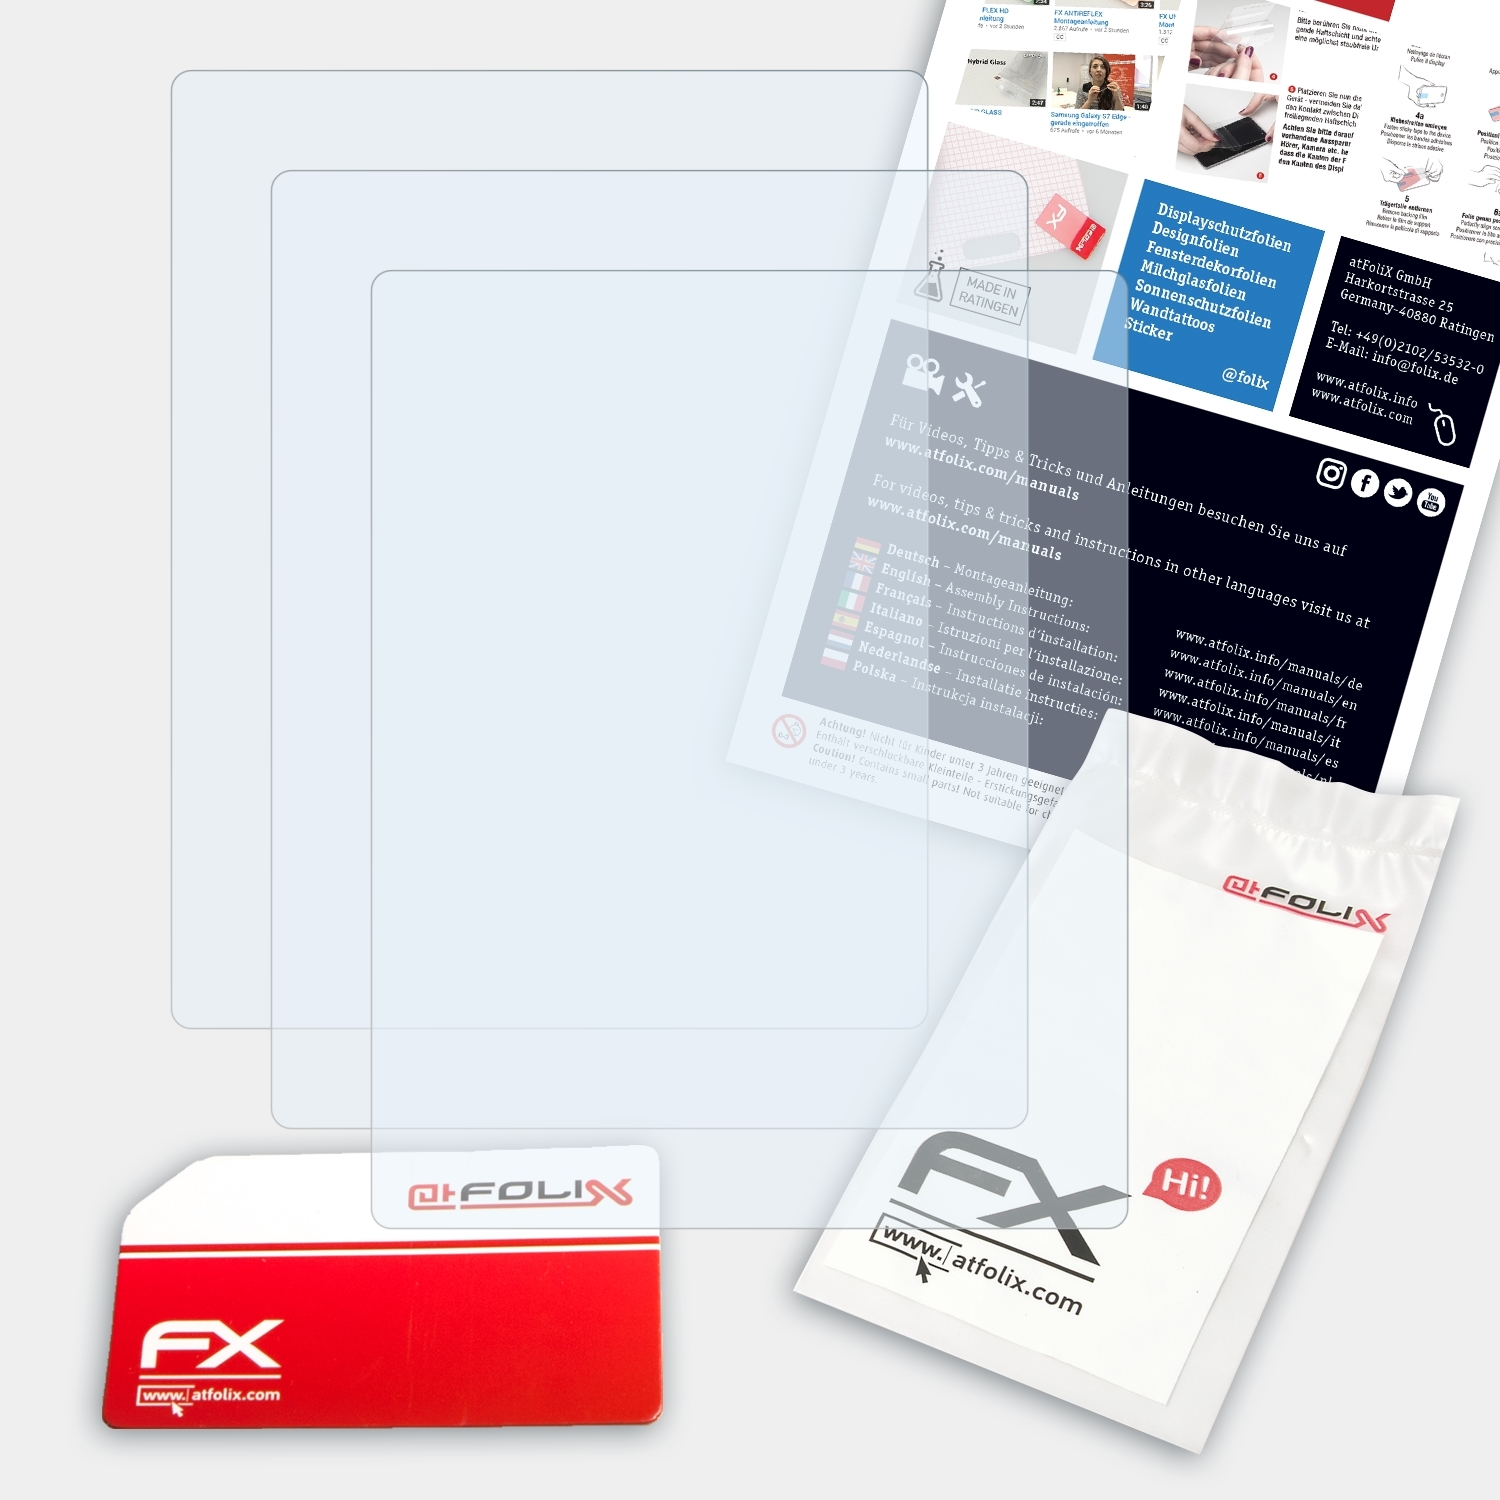 ATFOLIX 3x FX-Clear Displayschutz(für Icom IC-R30)